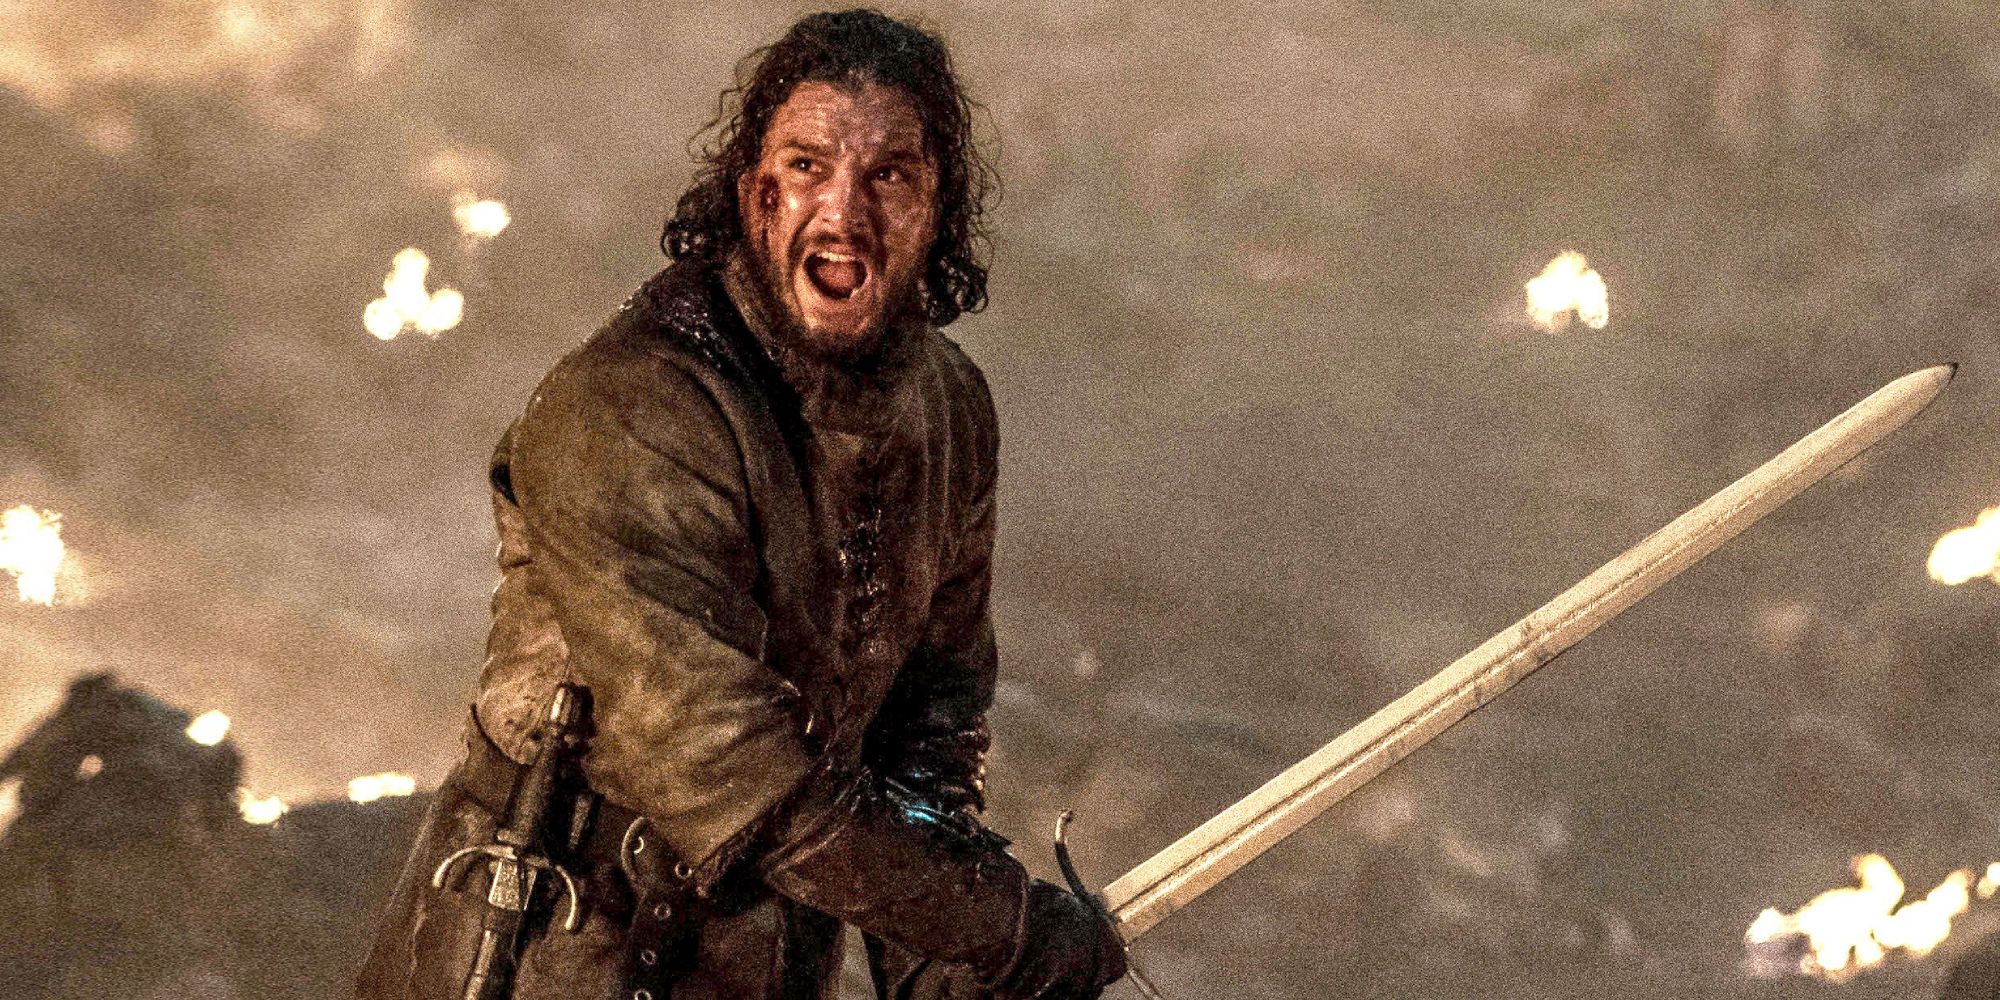 Kit Harington as Jon Snow in The Long Night episode of Game of Thrones